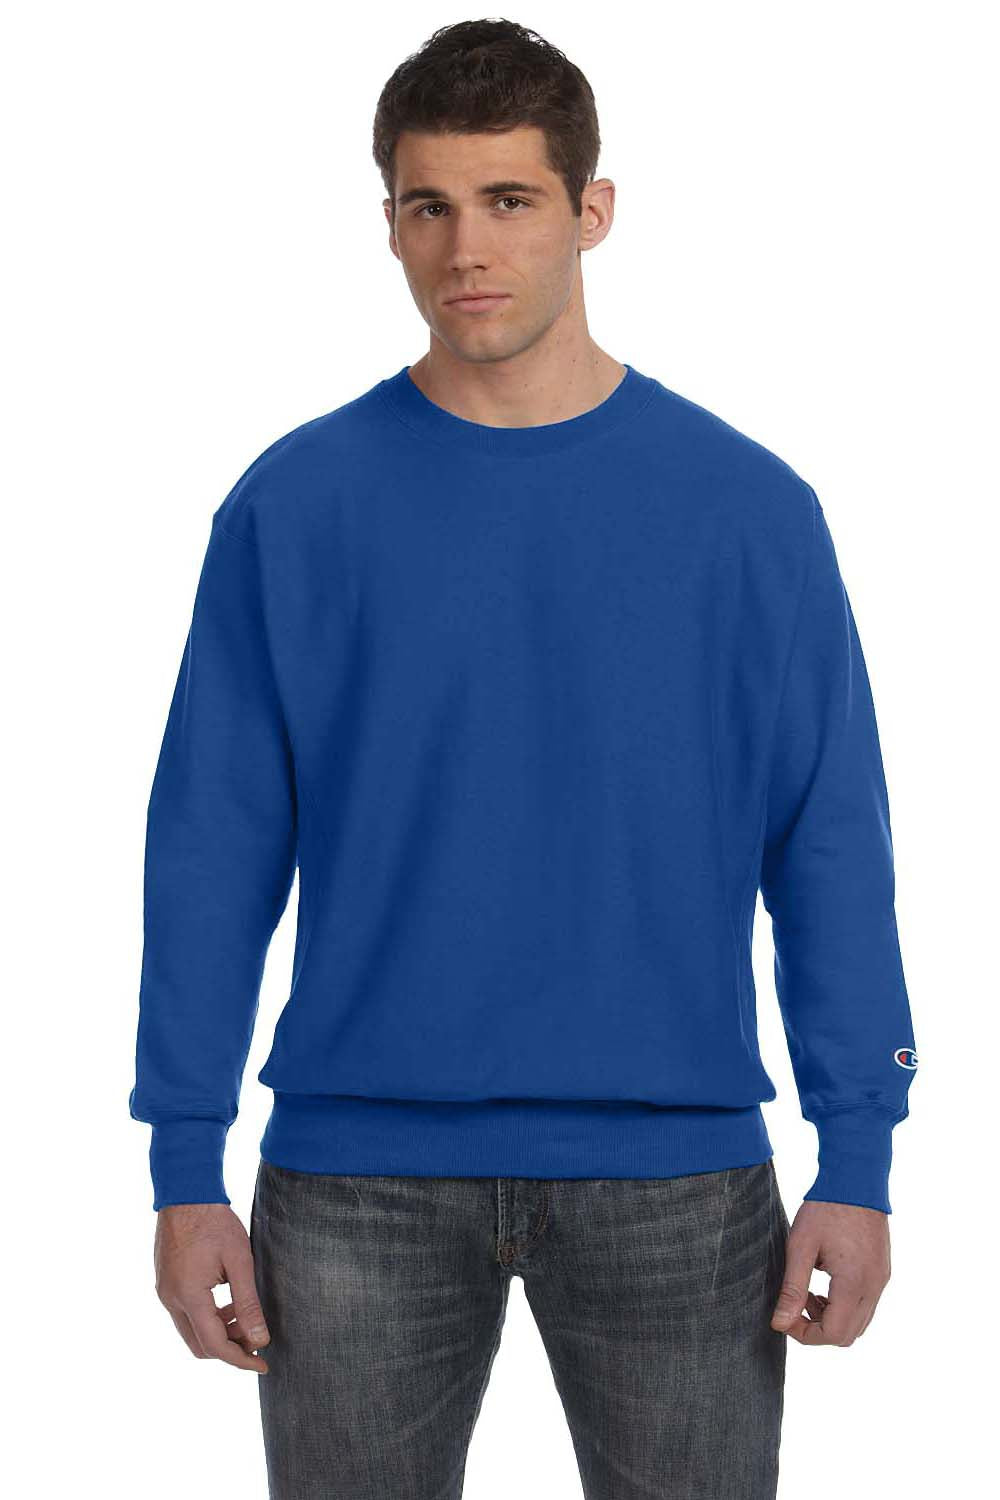 Champion S1049 Mens Crewneck Sweatshirt Royal Blue Front